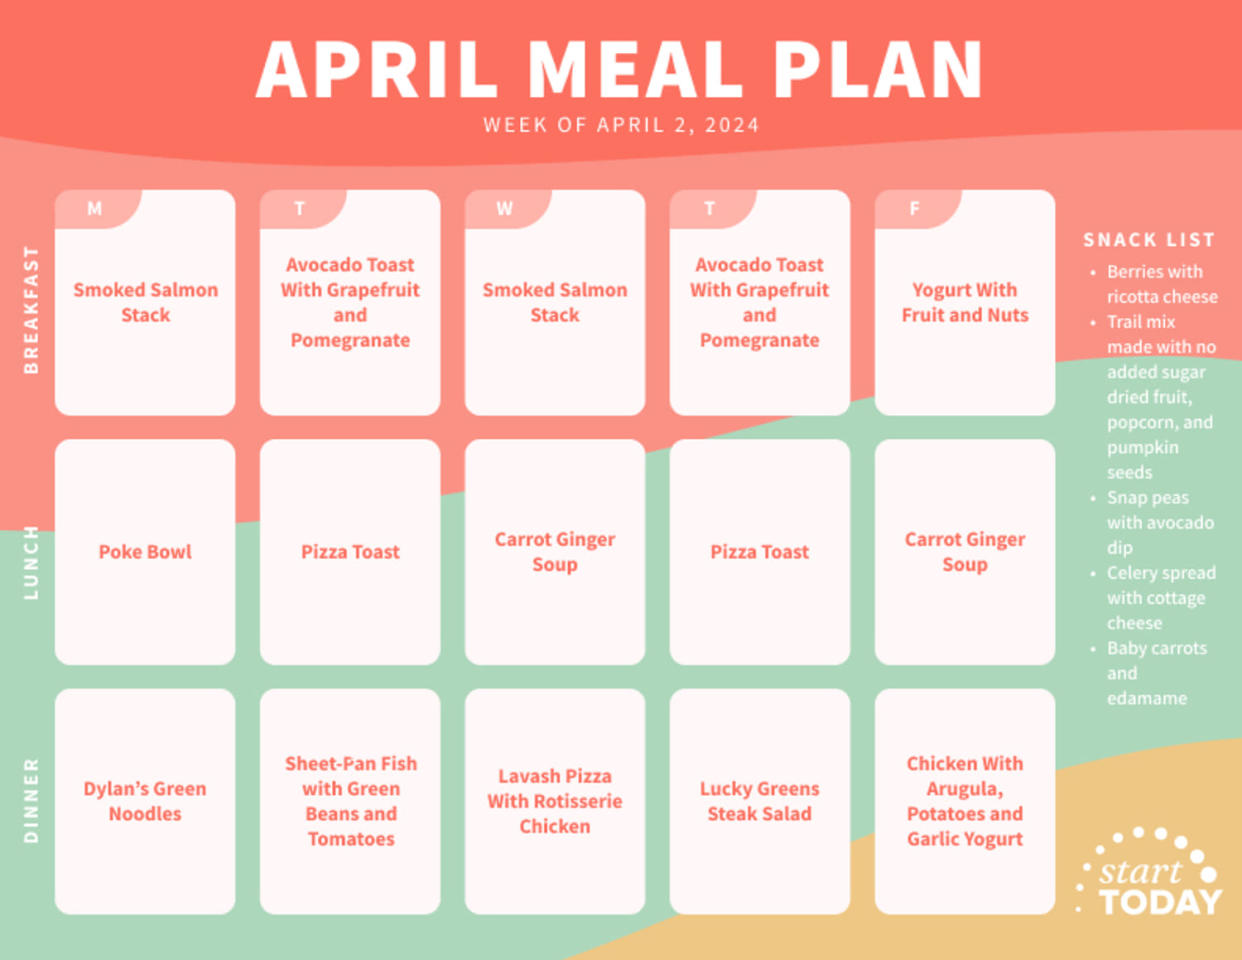 Start TODAY Meal Plan April 2, 2024